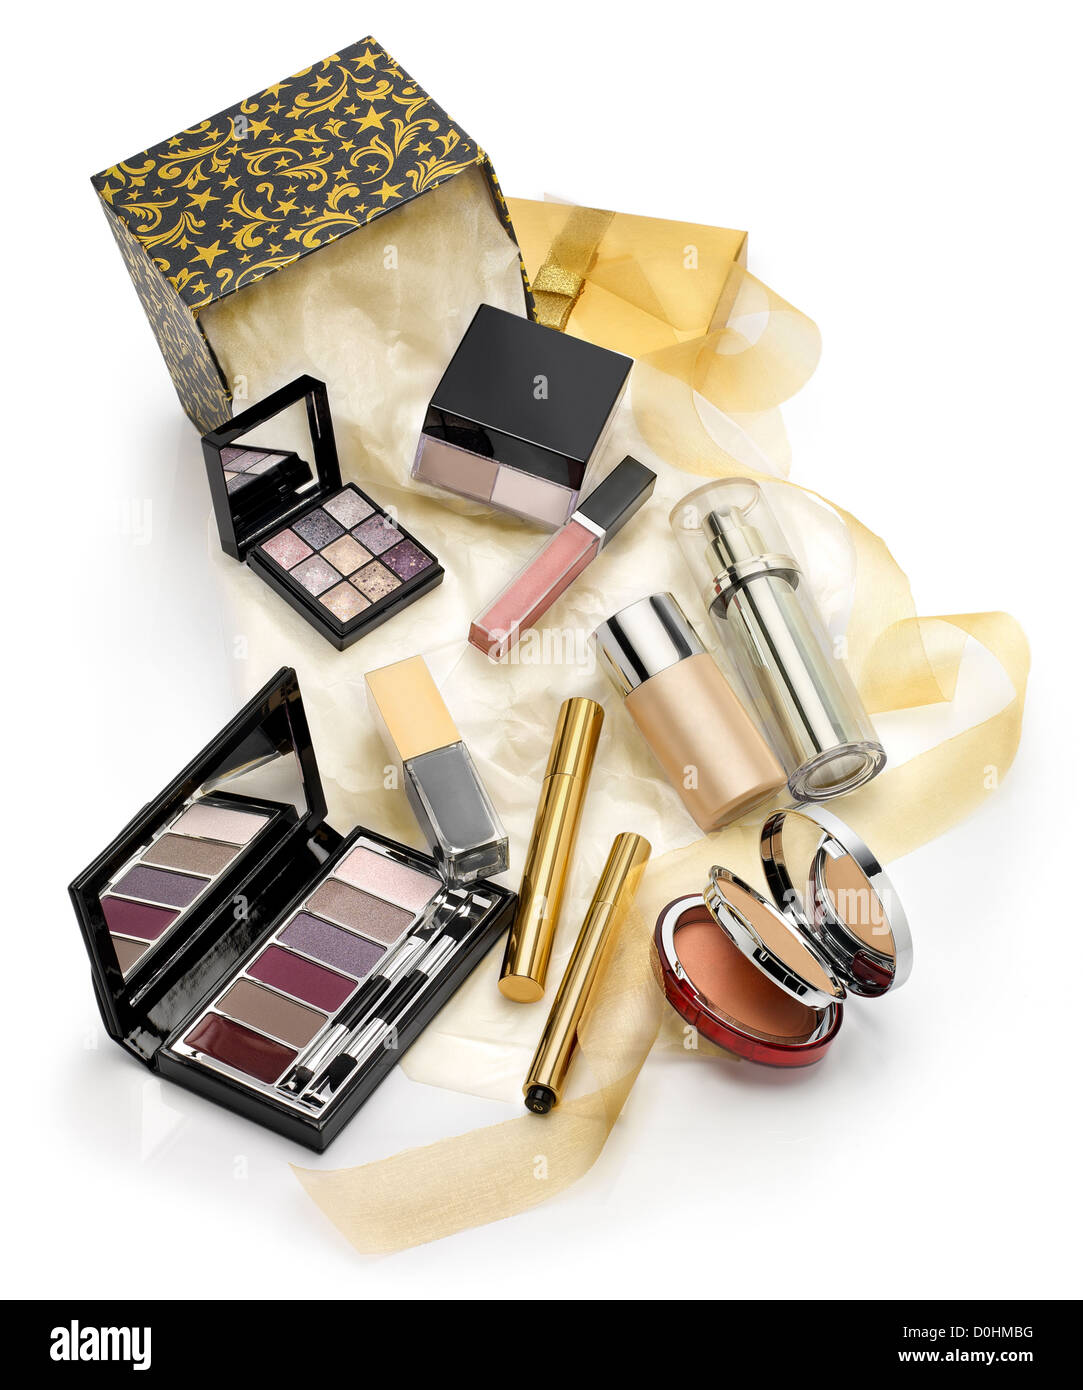 Make ups and cosmetics set gift Stock Photo